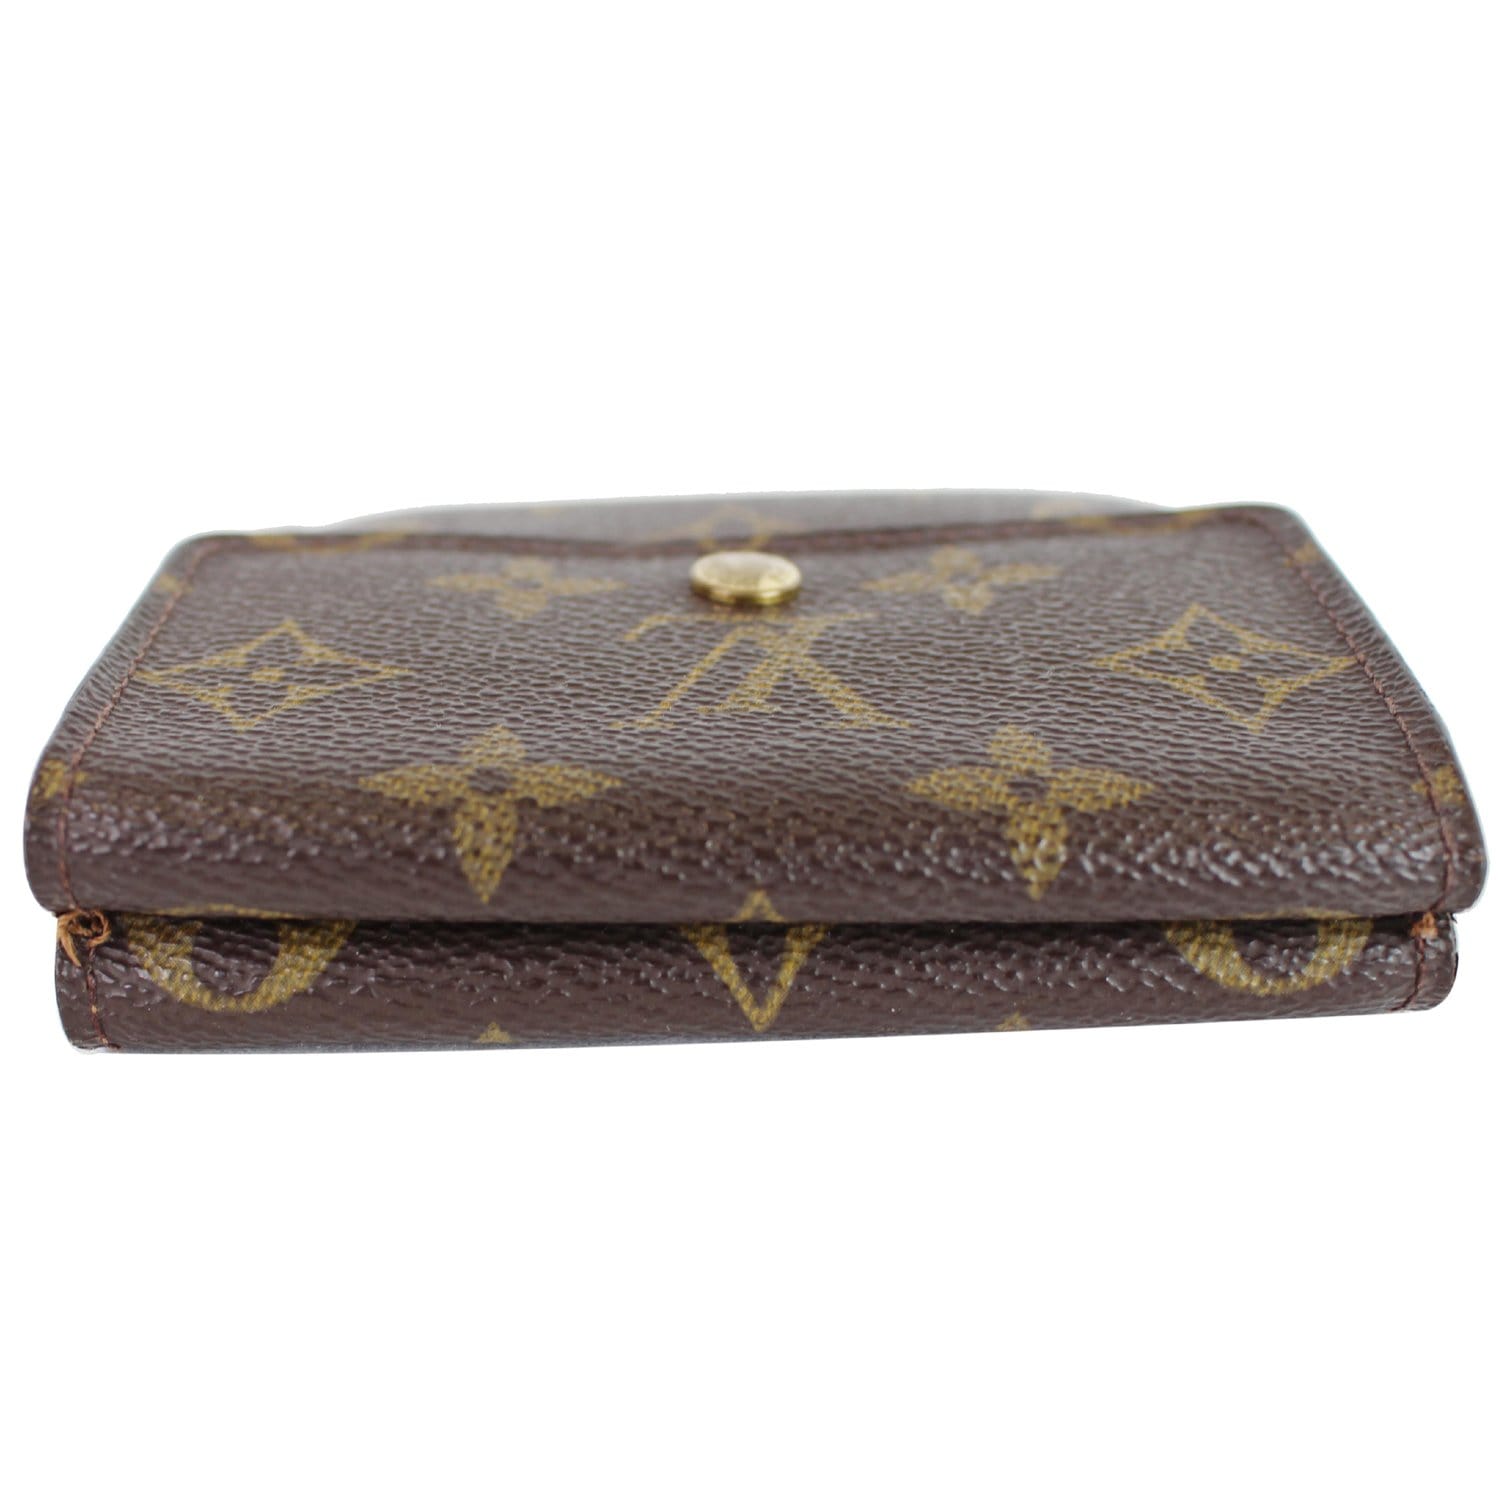 Louis Vuitton Double-V Leather Compact Wallet on SALE